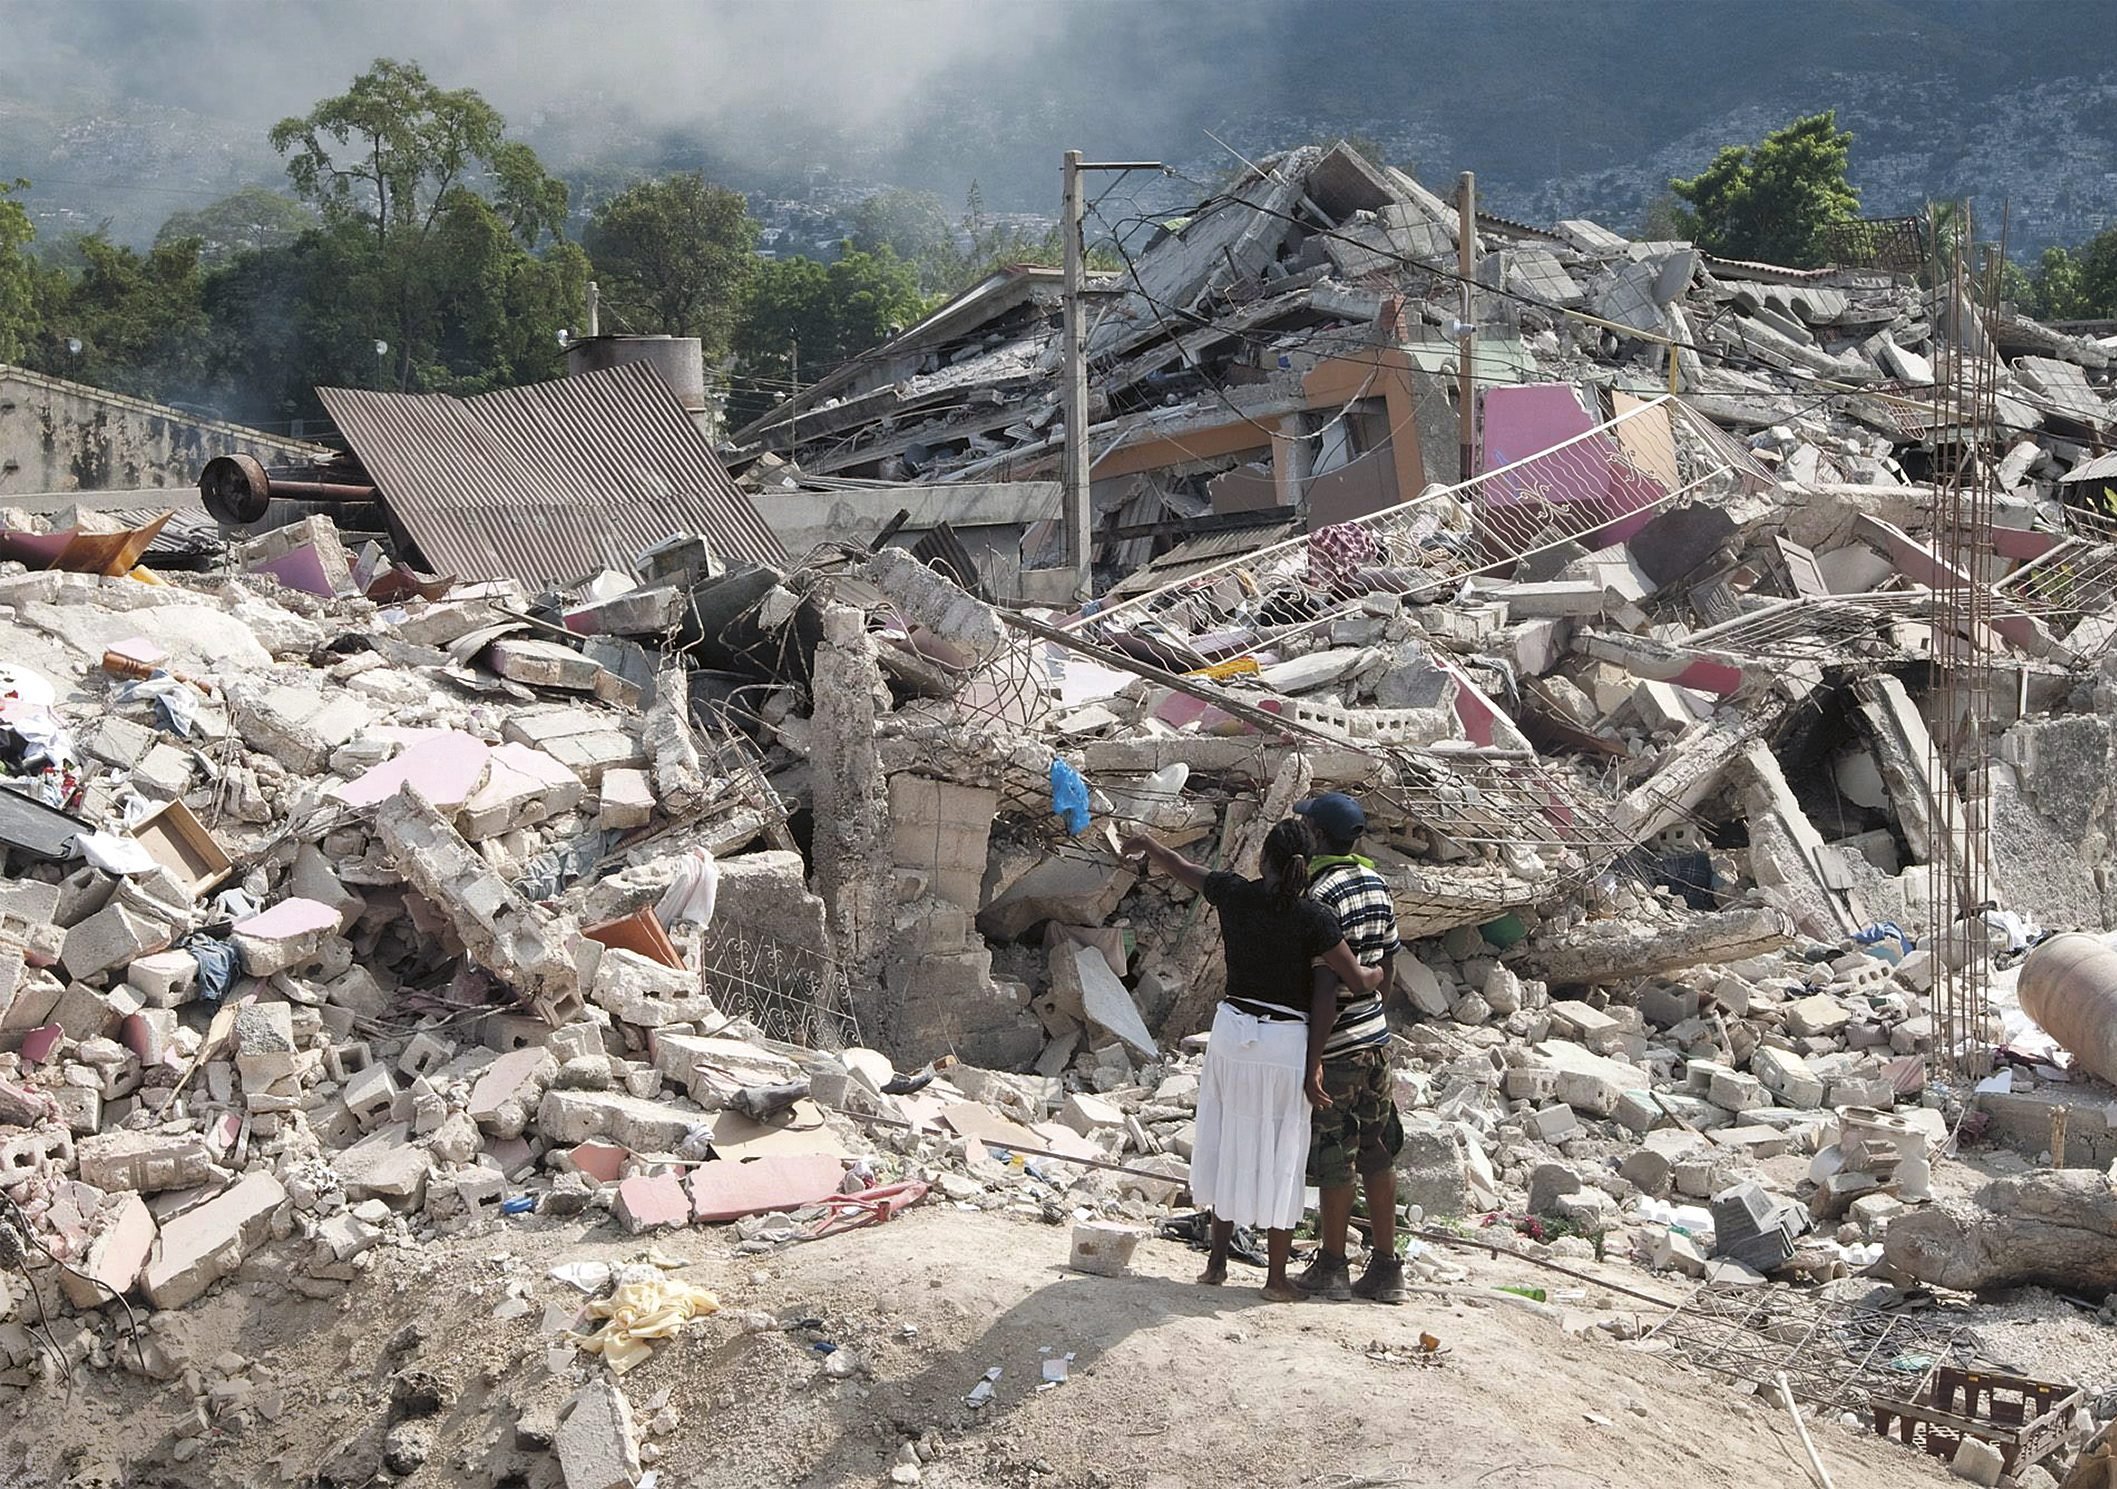 Port-au-Prince, Haiti, in the aftermath of the 2010 earthquake